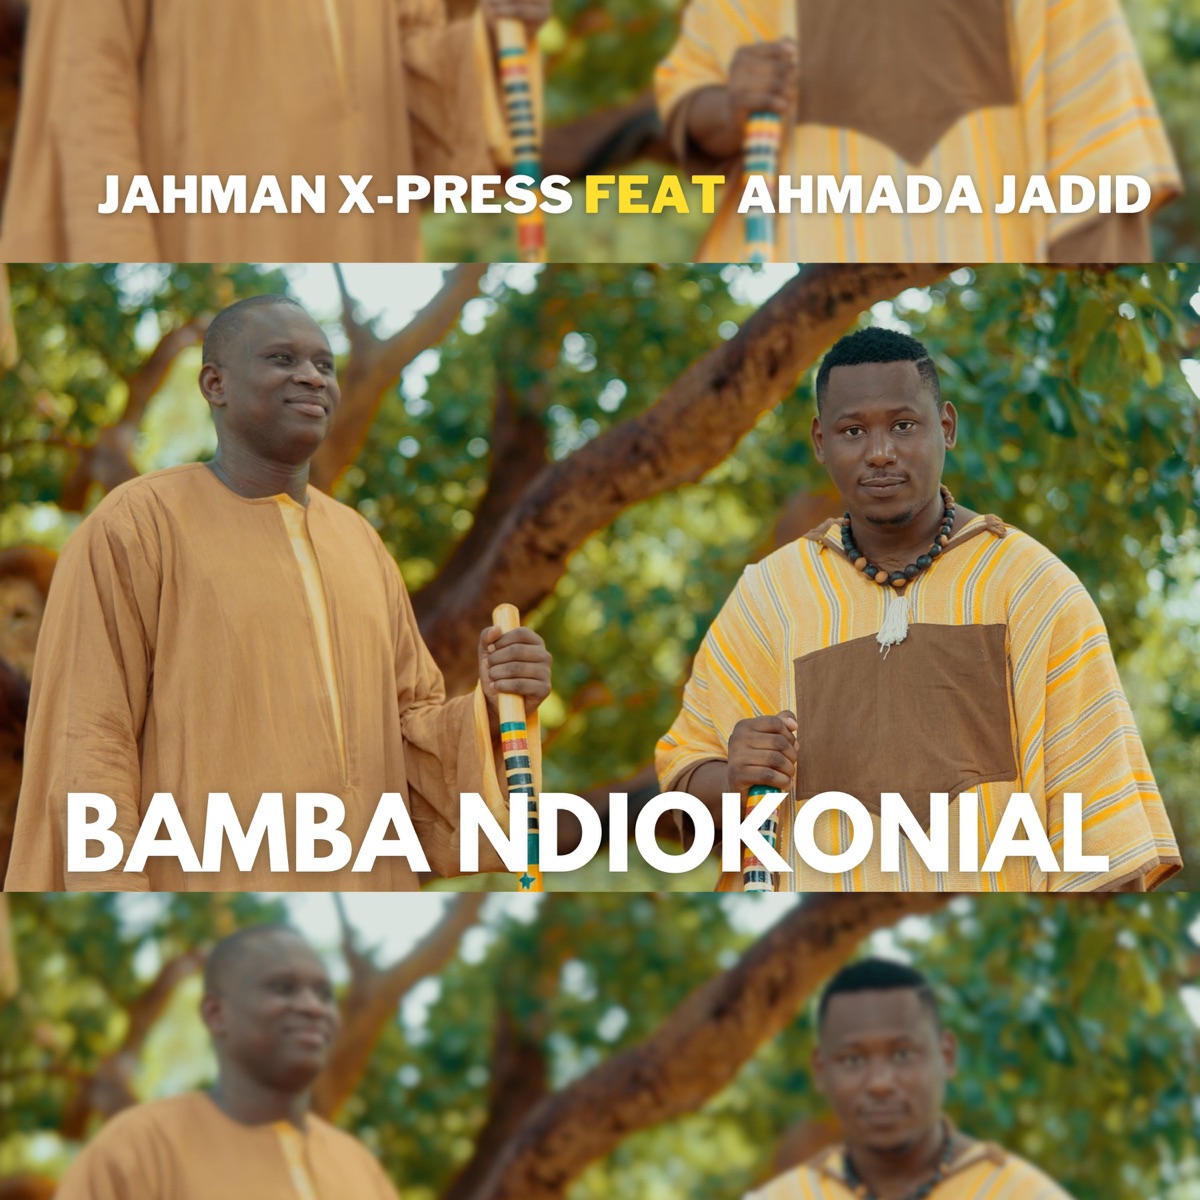 Bamba Ndiokonial (feat. Ahmada Jadid) - Single - Album by Jahman X-press -  Apple Music